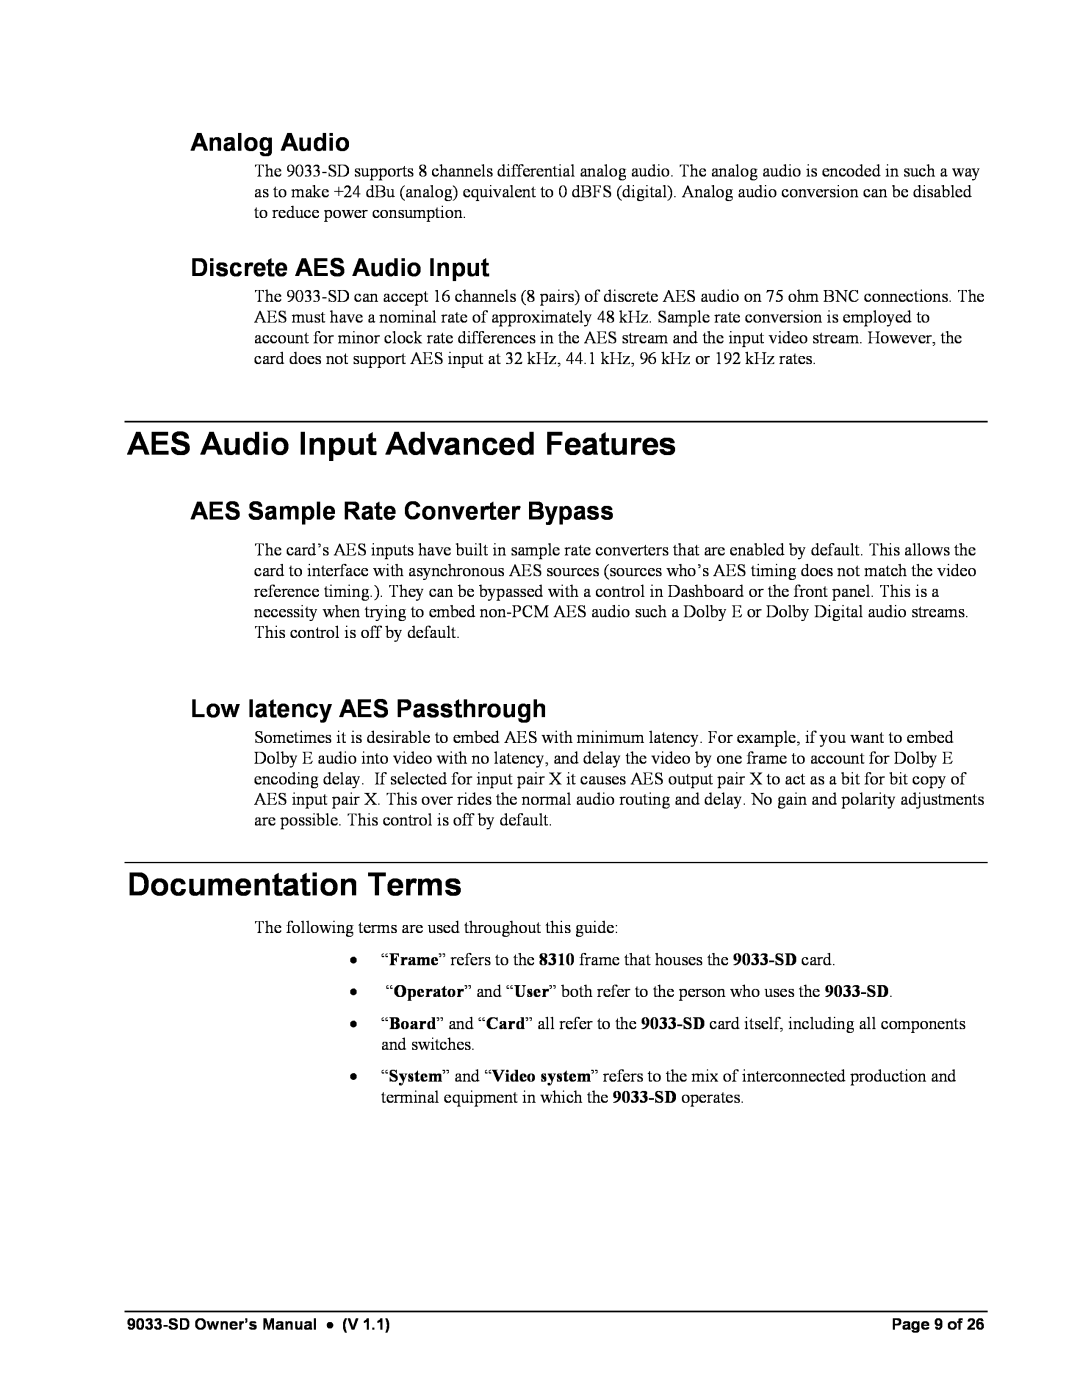 Cobalt Networks 9033-SD AES Audio Input Advanced Features, Documentation Terms, Analog Audio, Discrete AES Audio Input 